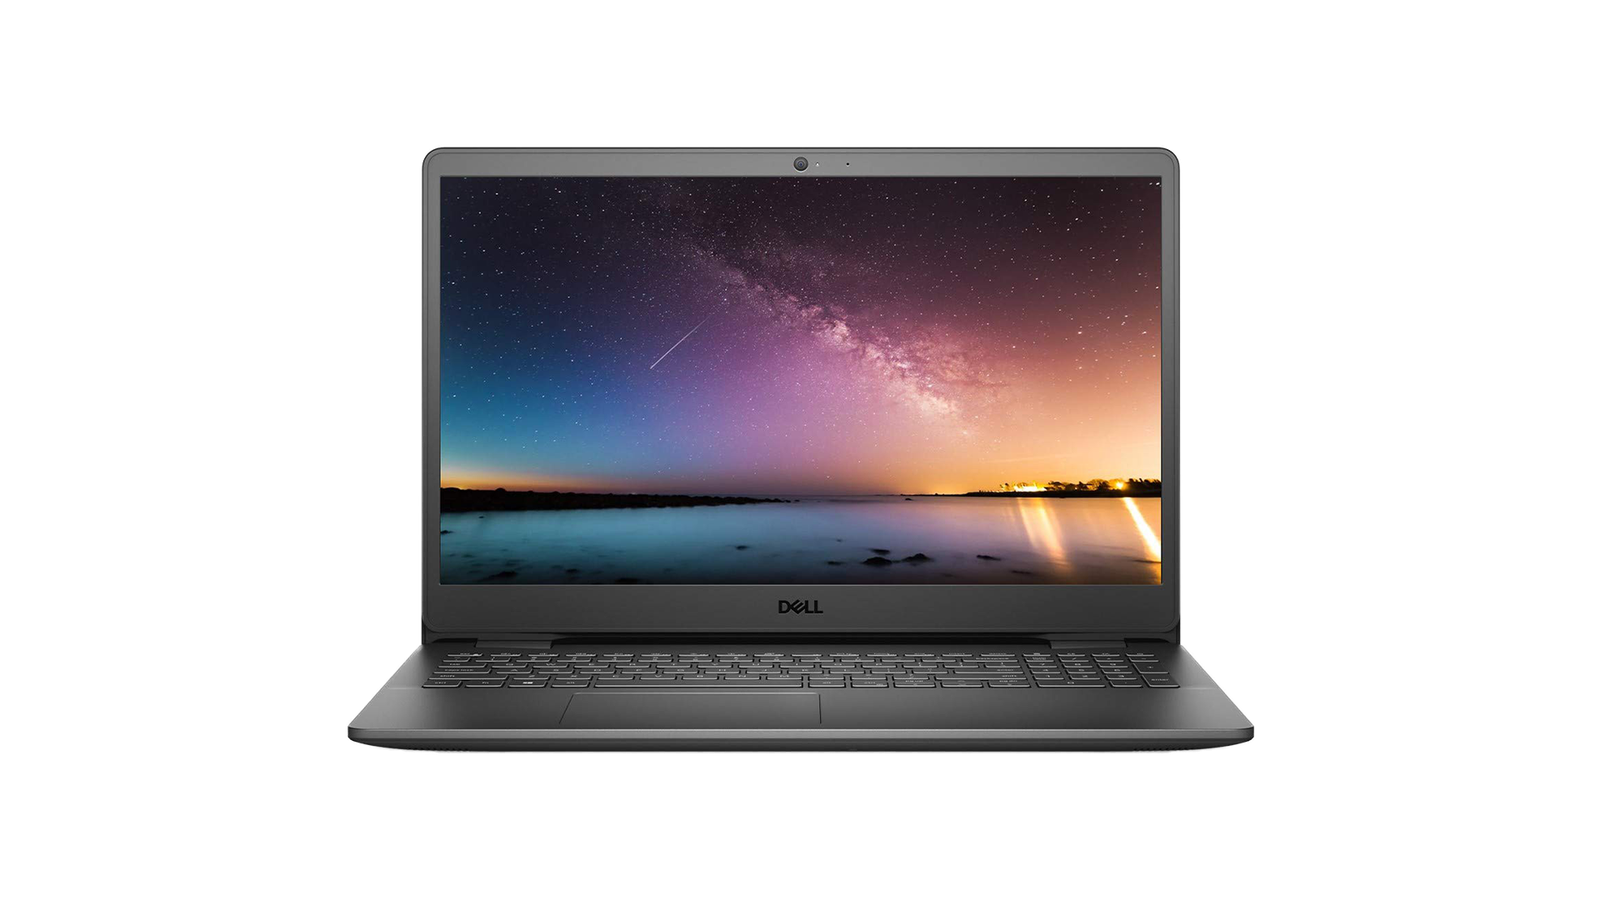 Dell Inspiron 15 3000 - The best cheap Windows laptop